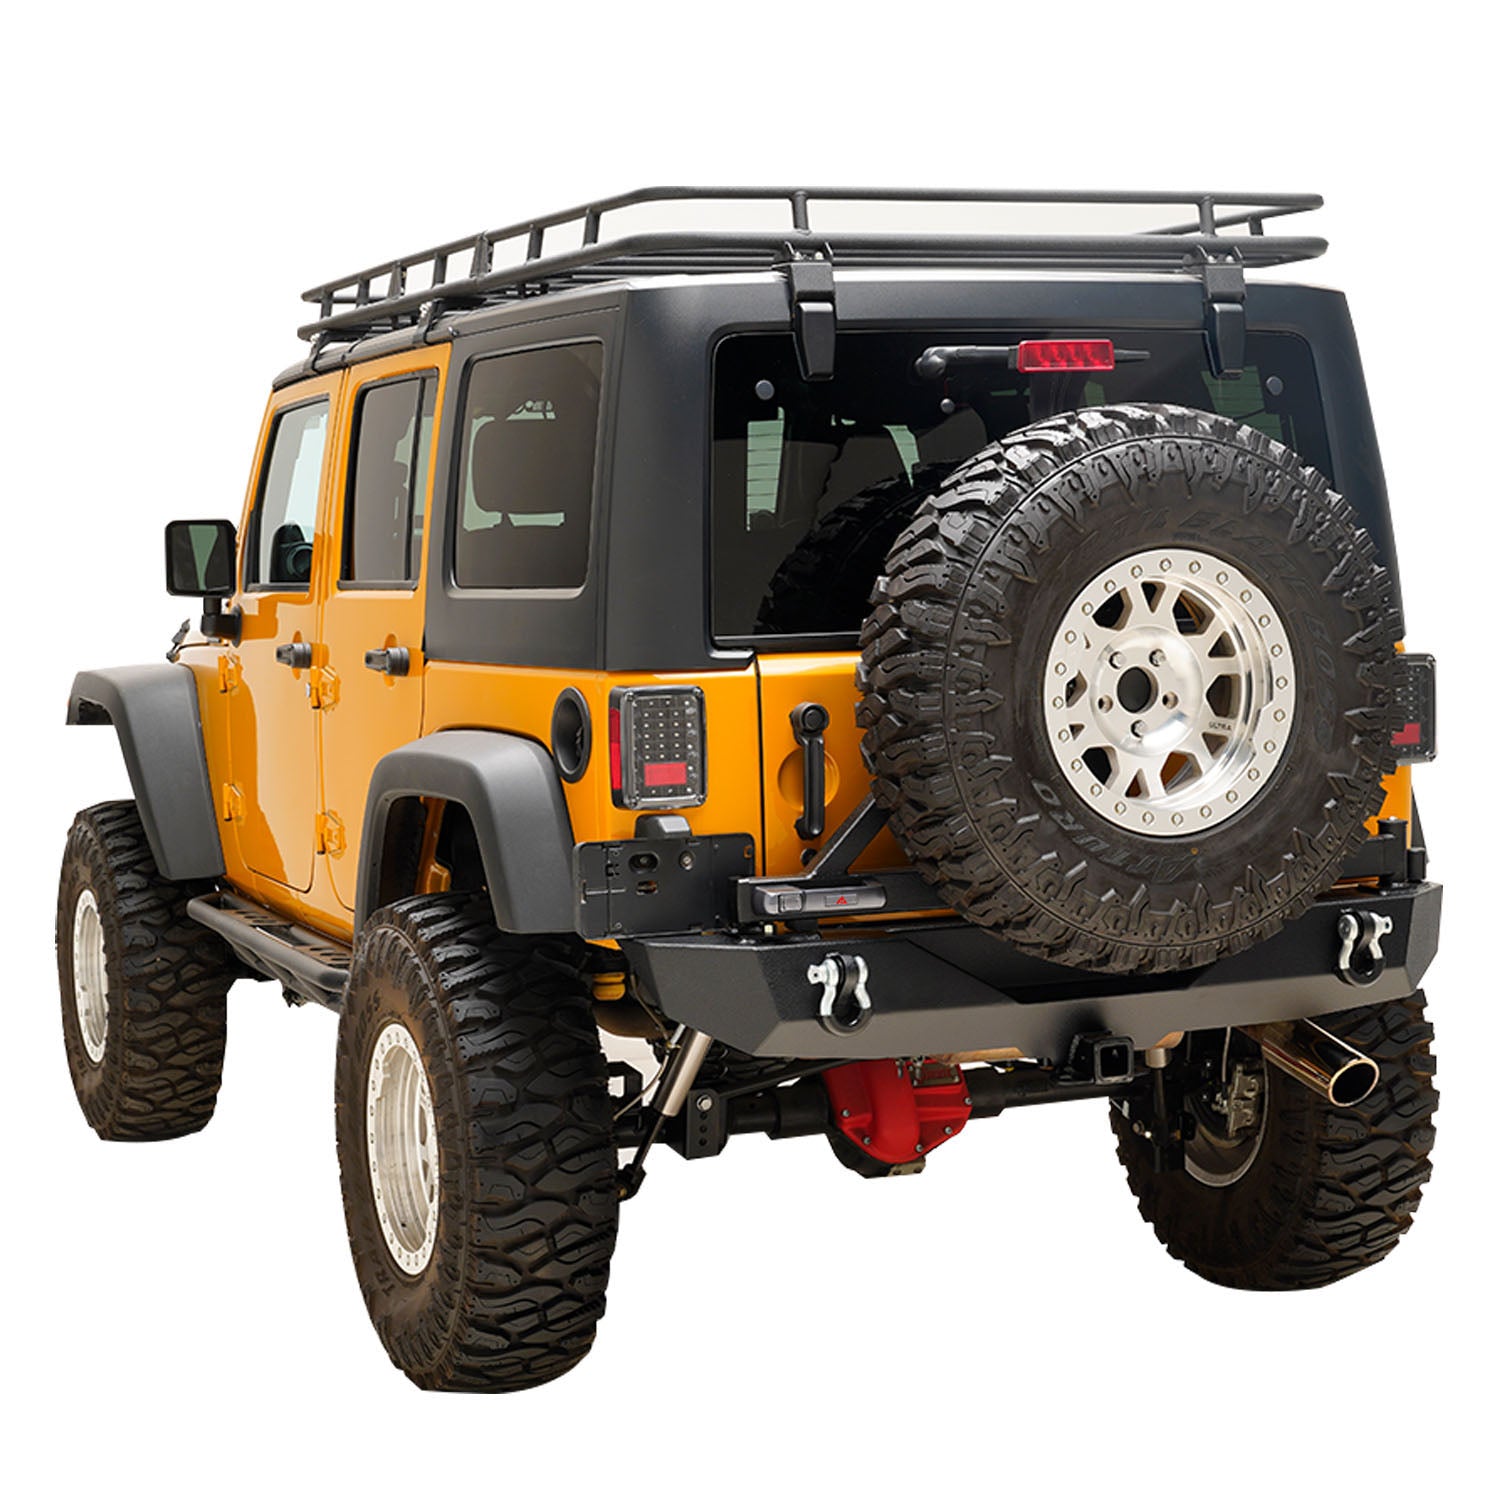 07-18 Jeep Wrangler JK Body Width Rear Bumper with SureGrip Tire Carrier (51-0315)